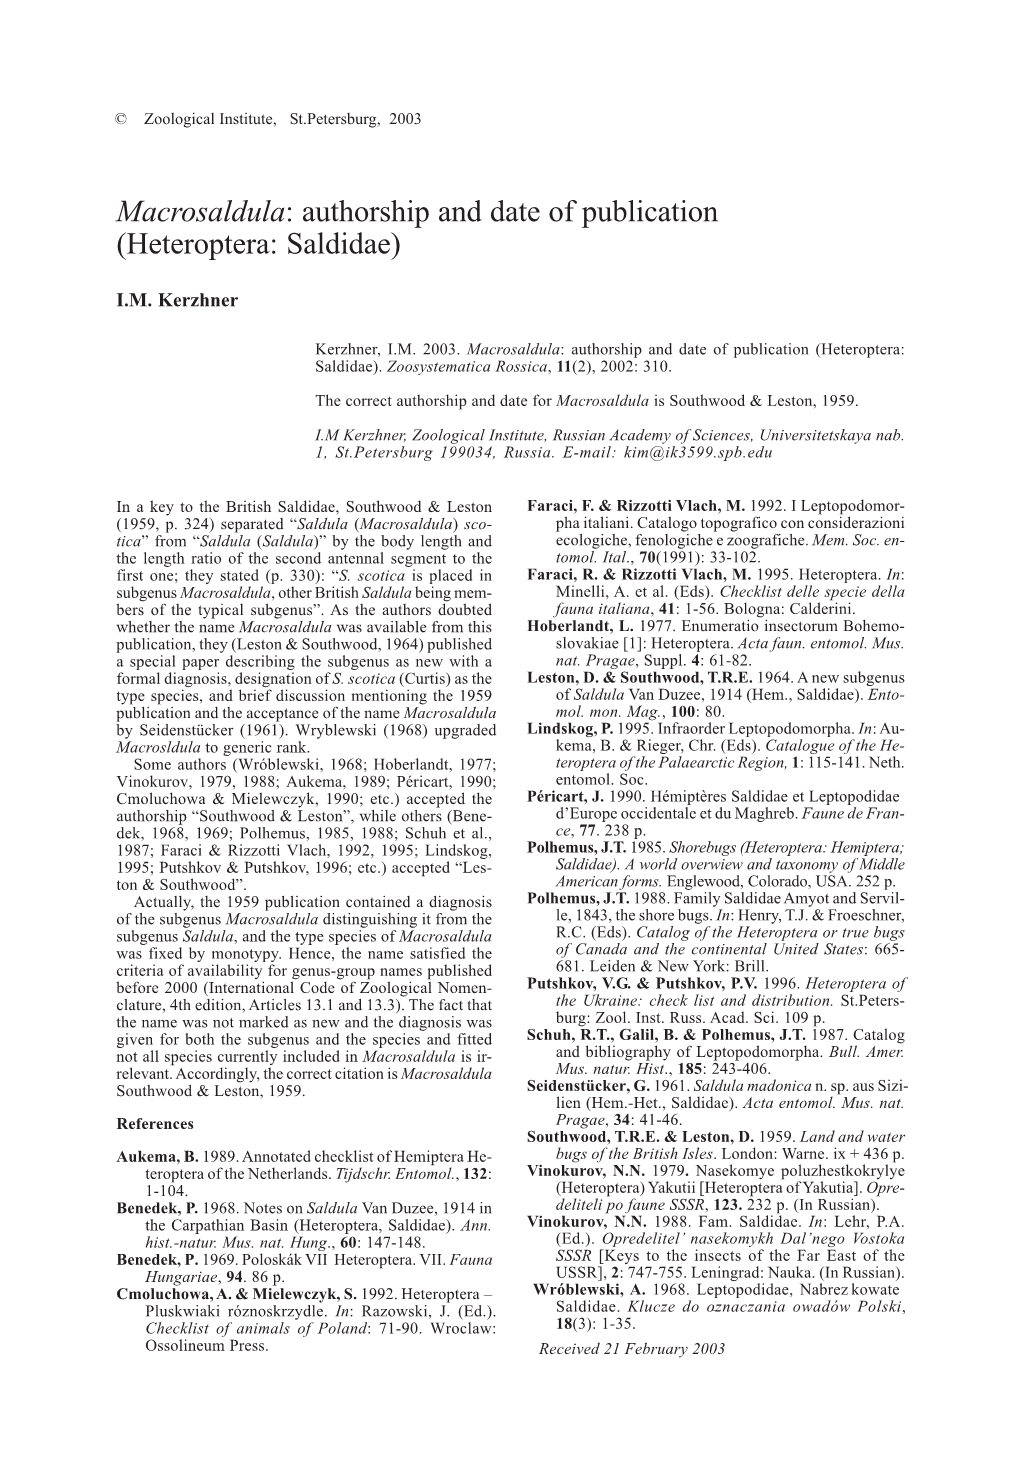 Macrosaldula: Authorship and Date of Publication (Heteroptera: Saldidae)